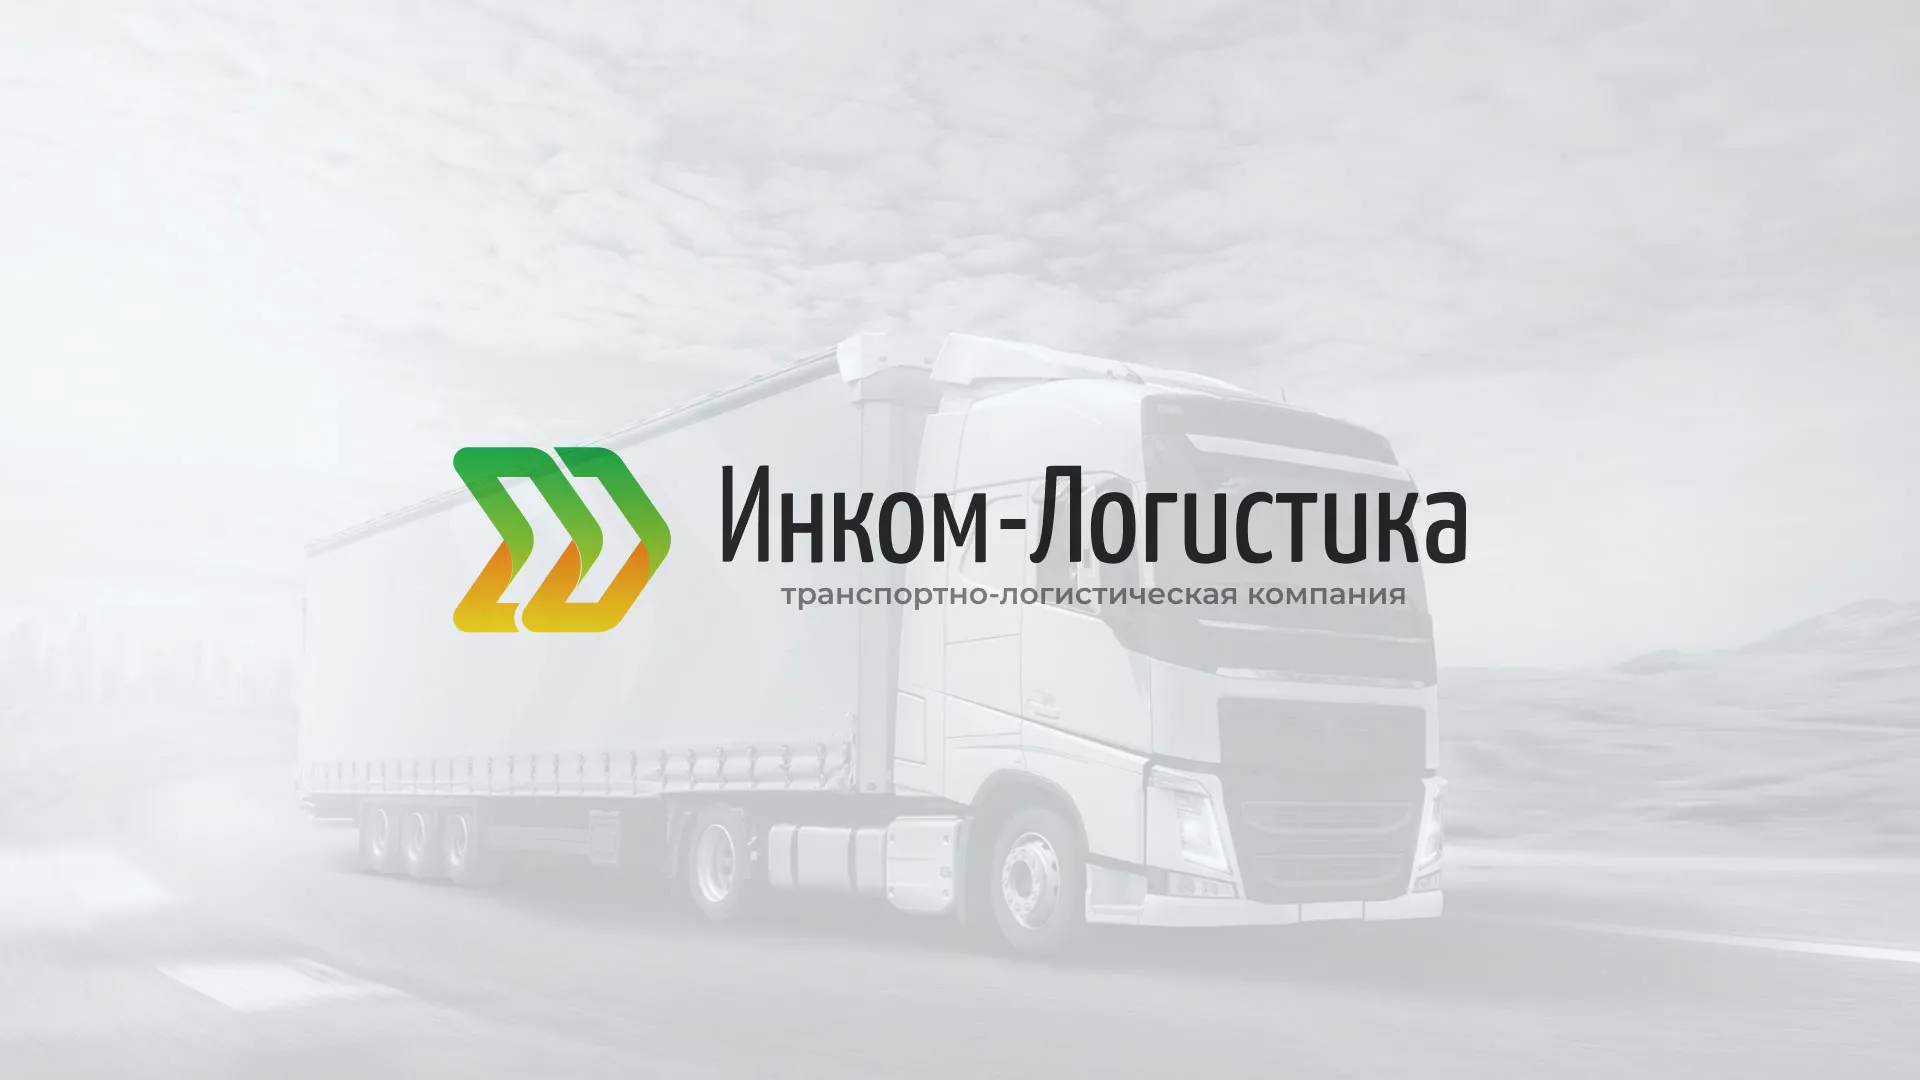 Разработка логотипа и сайта компании «Инком-Логистика» в Иваново